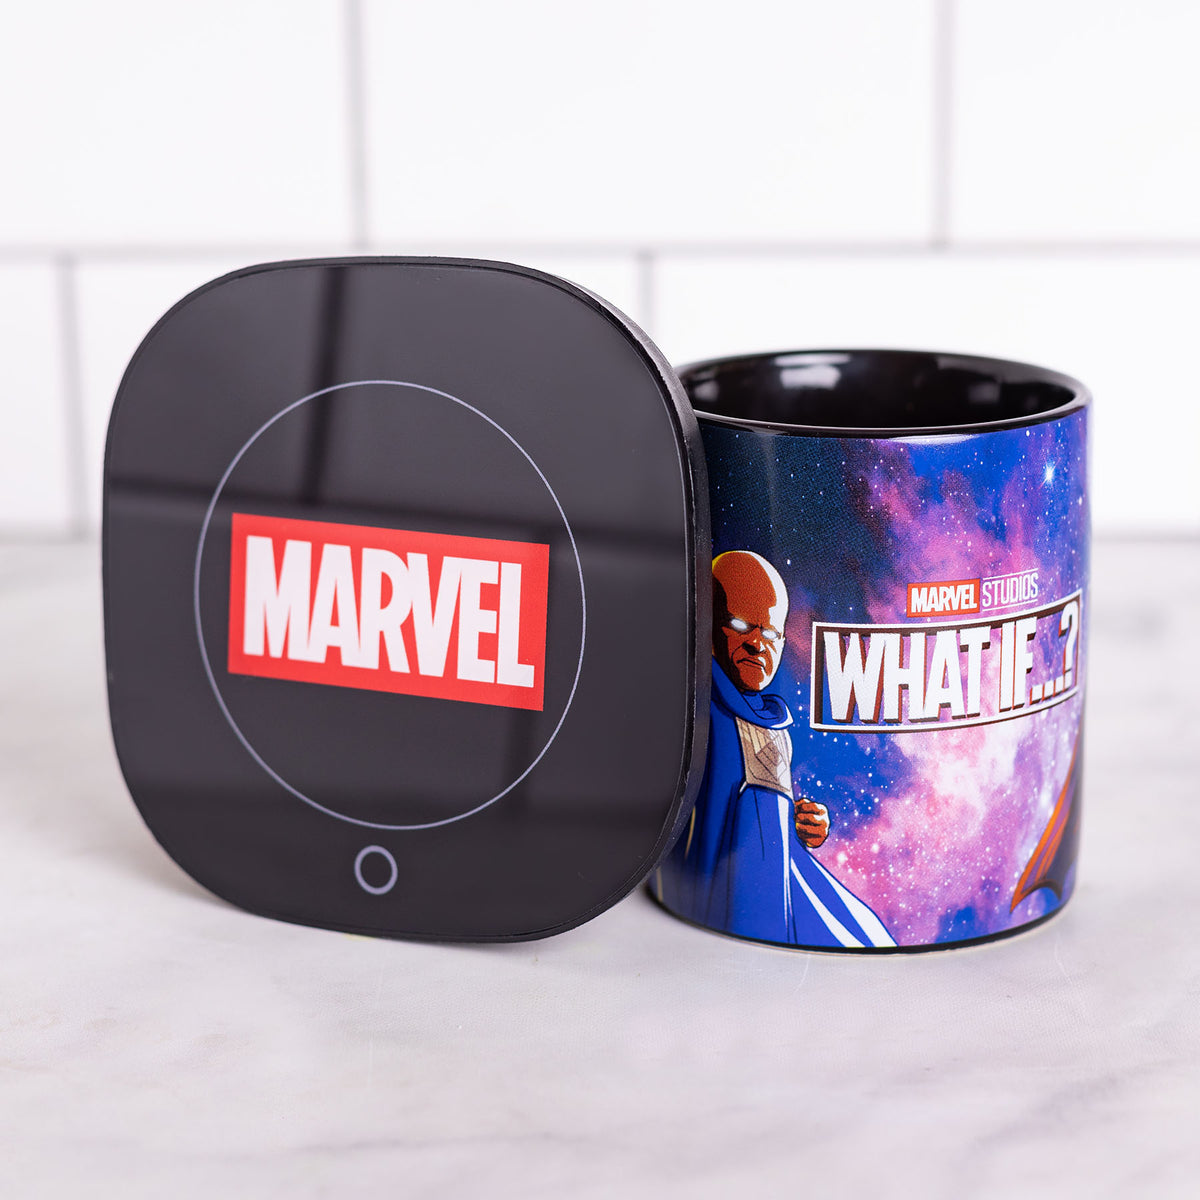 Uncanny Brands' Releasing Star Wars and Marvel Mug Warmers